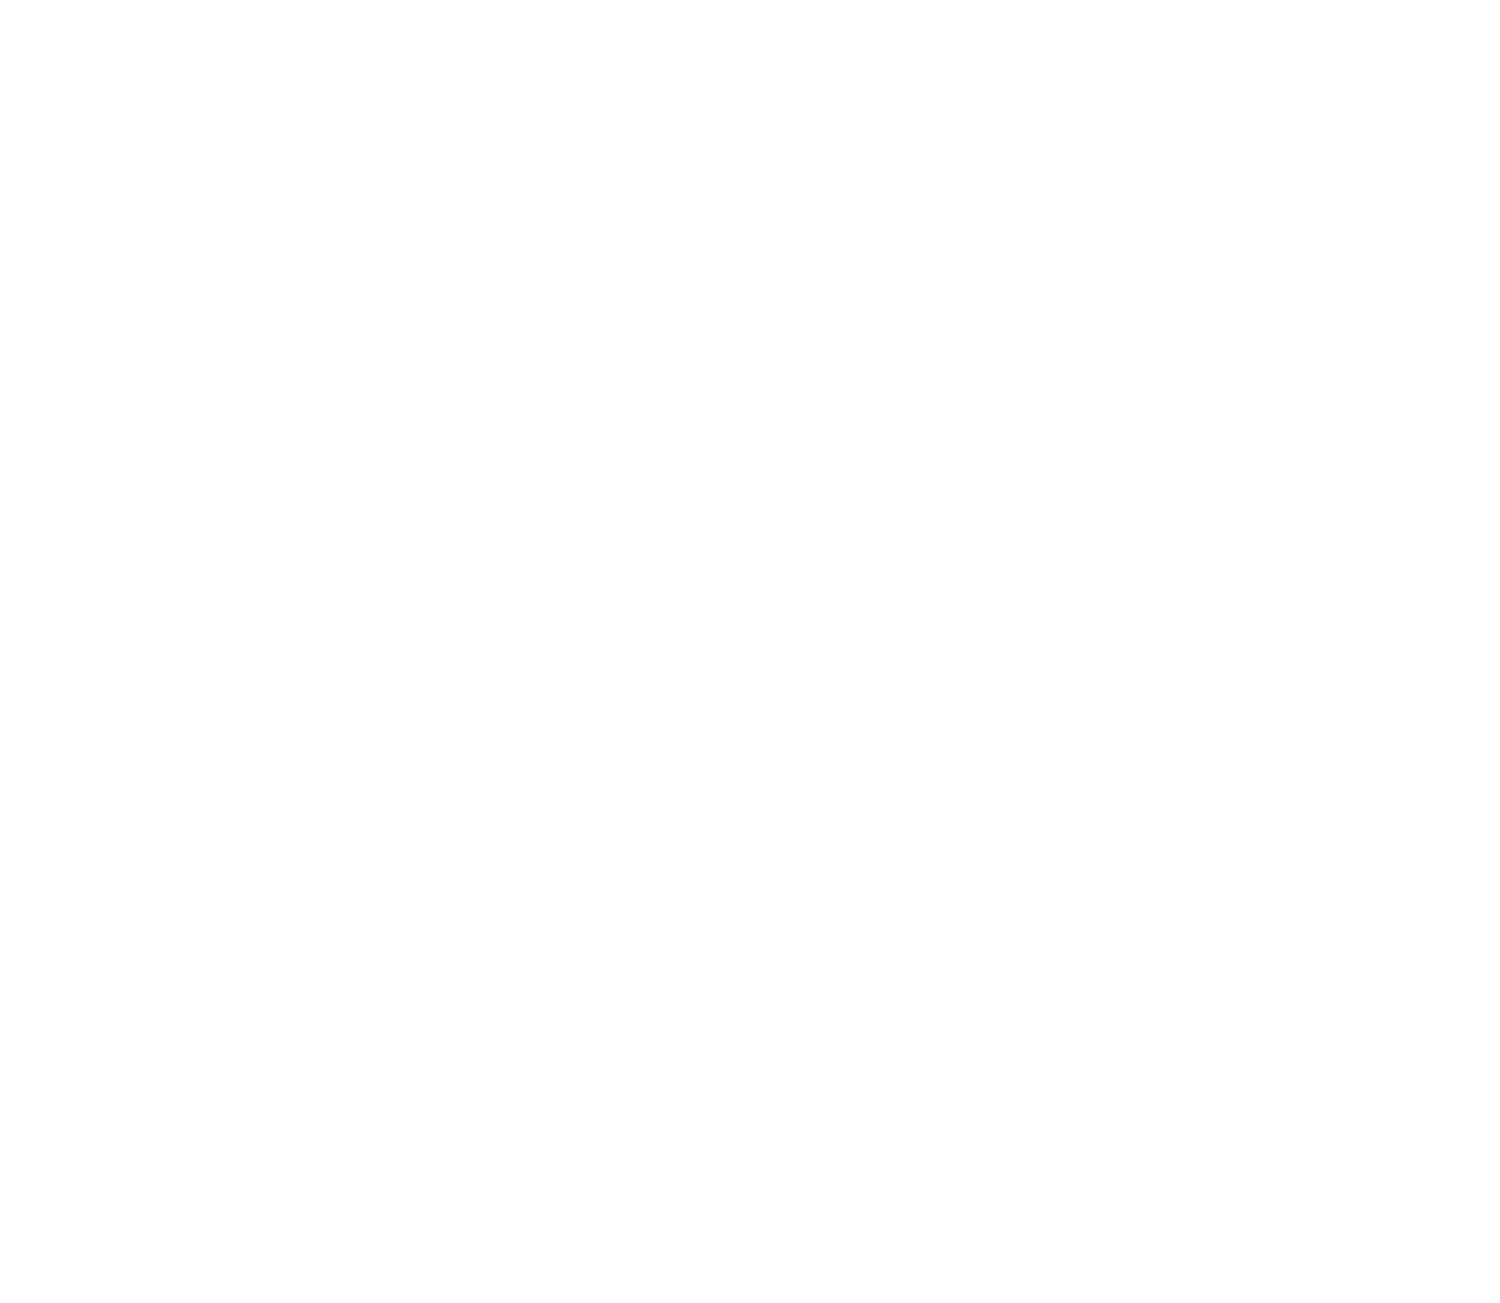 Coast 